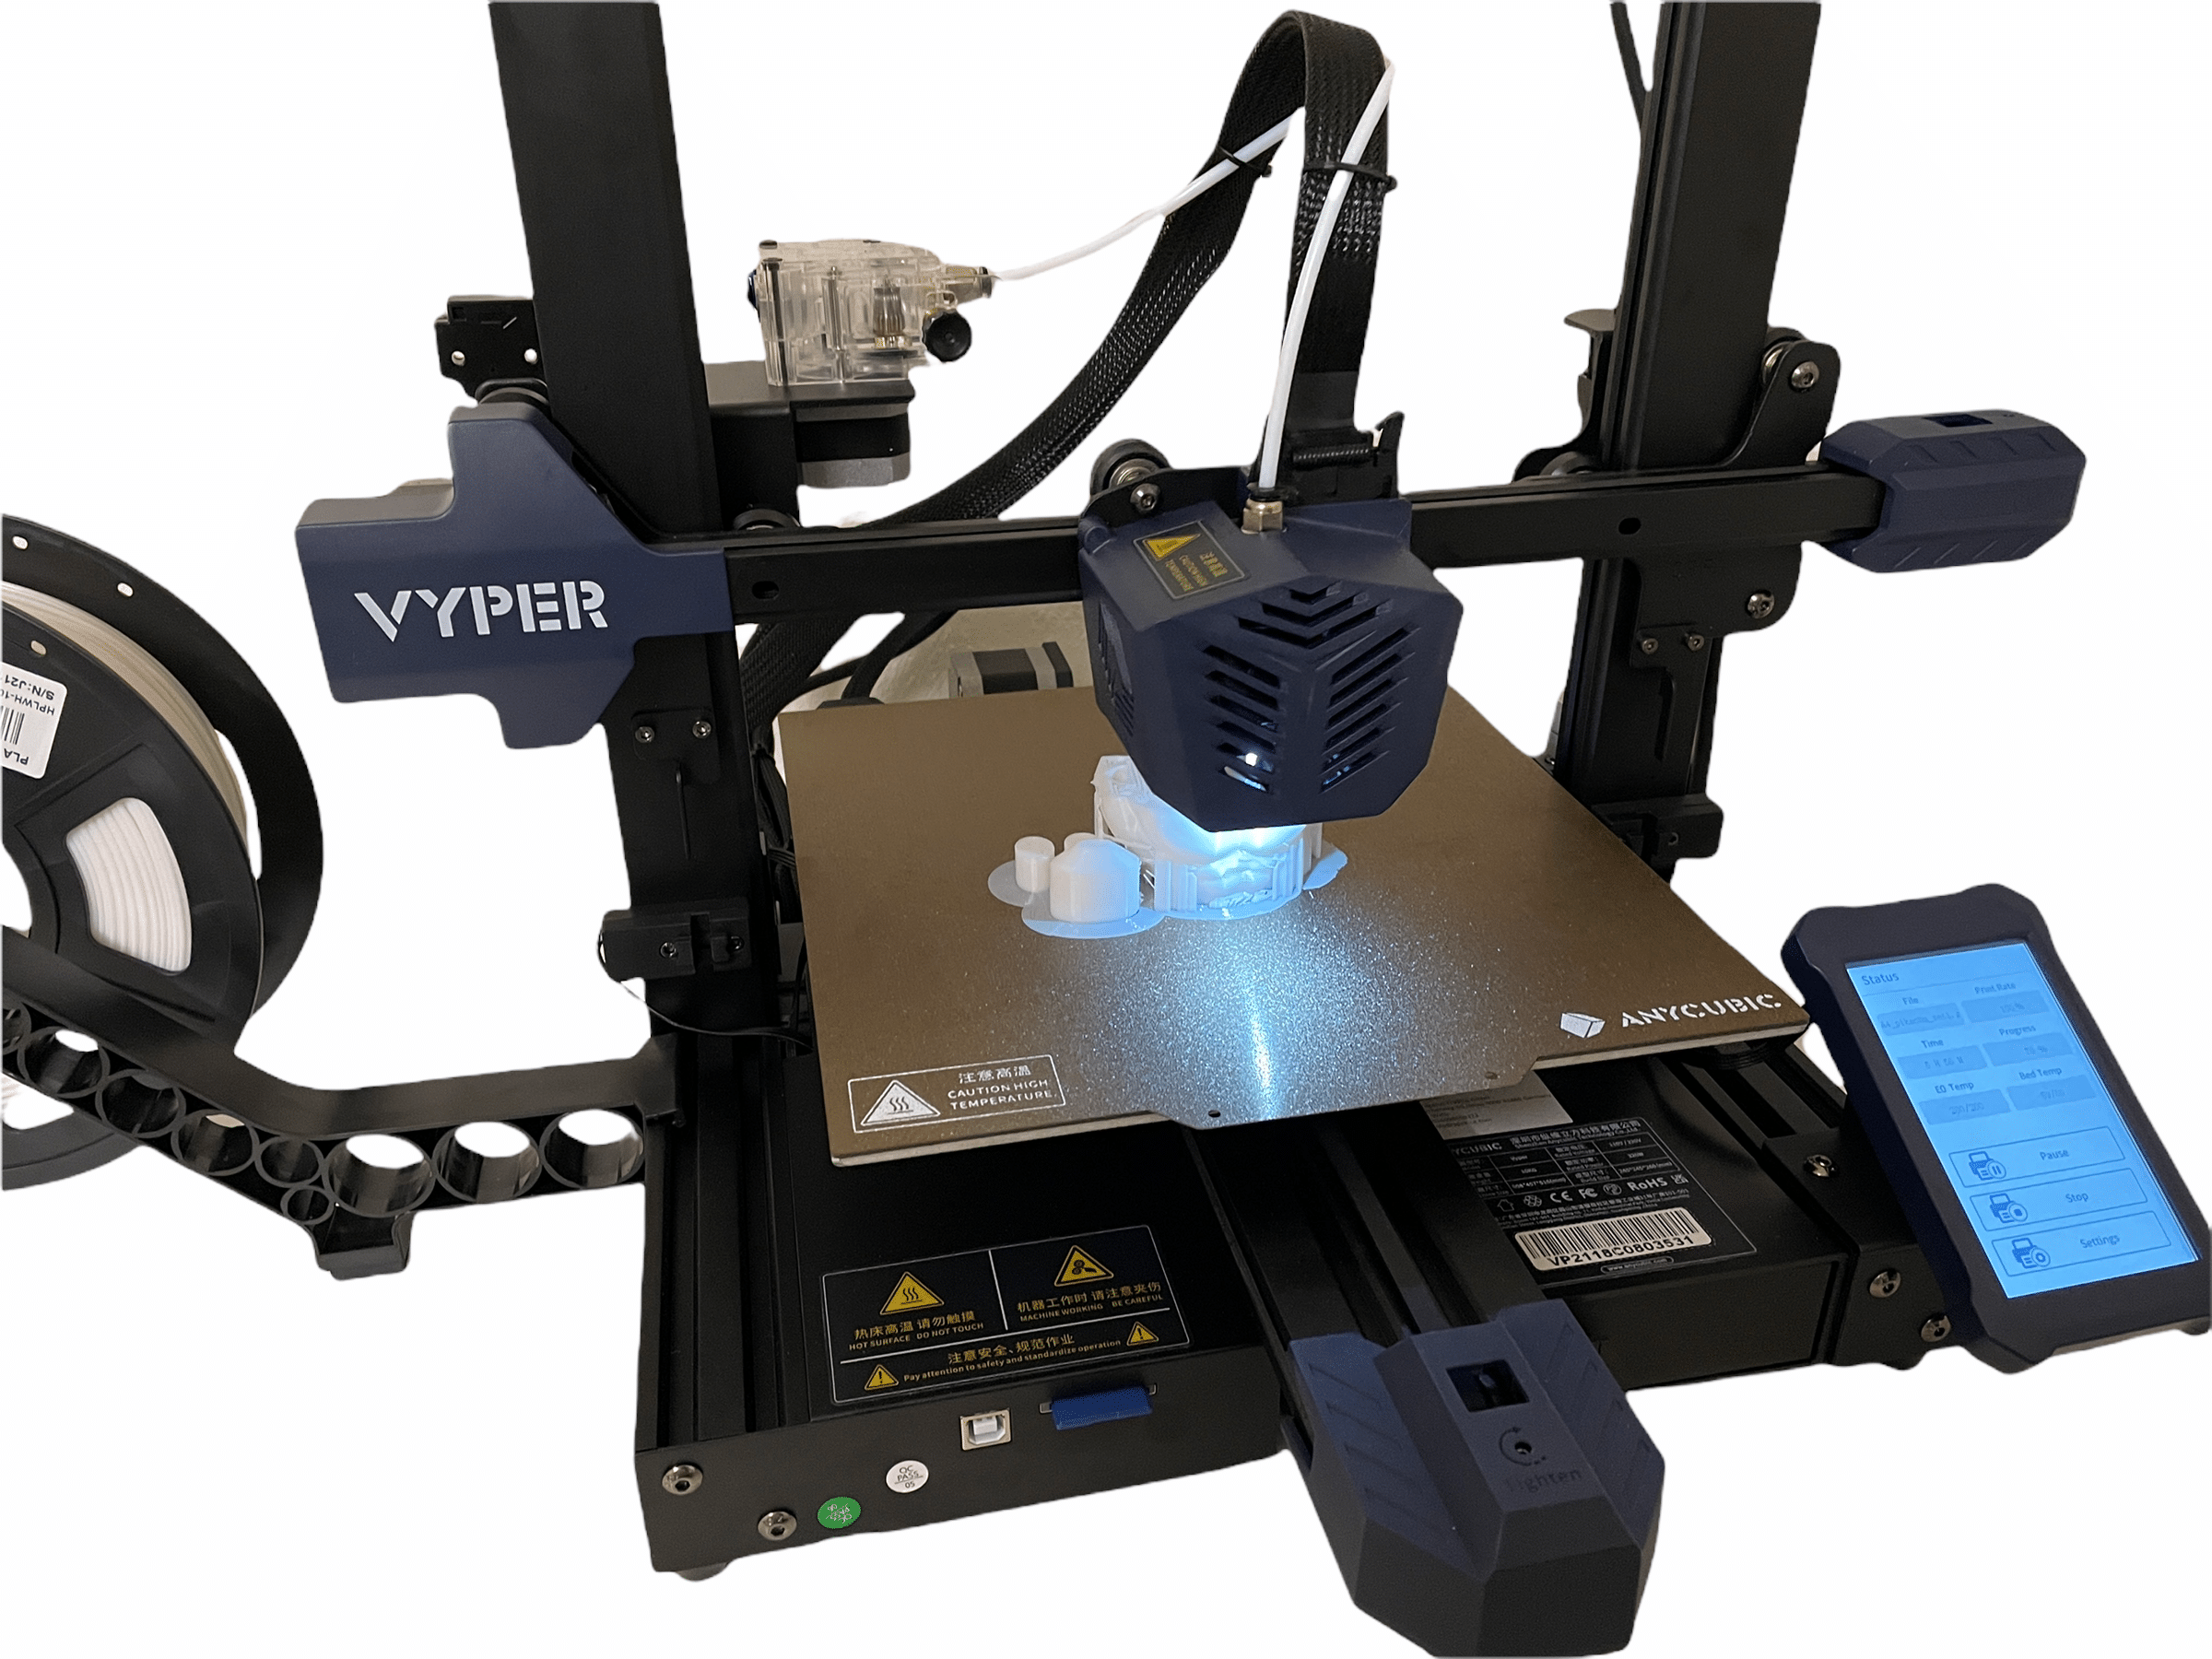 Pelmel Laatste Gesprekelijk Anycubic Vyper - The 3D printer for beginners to advanced users in test